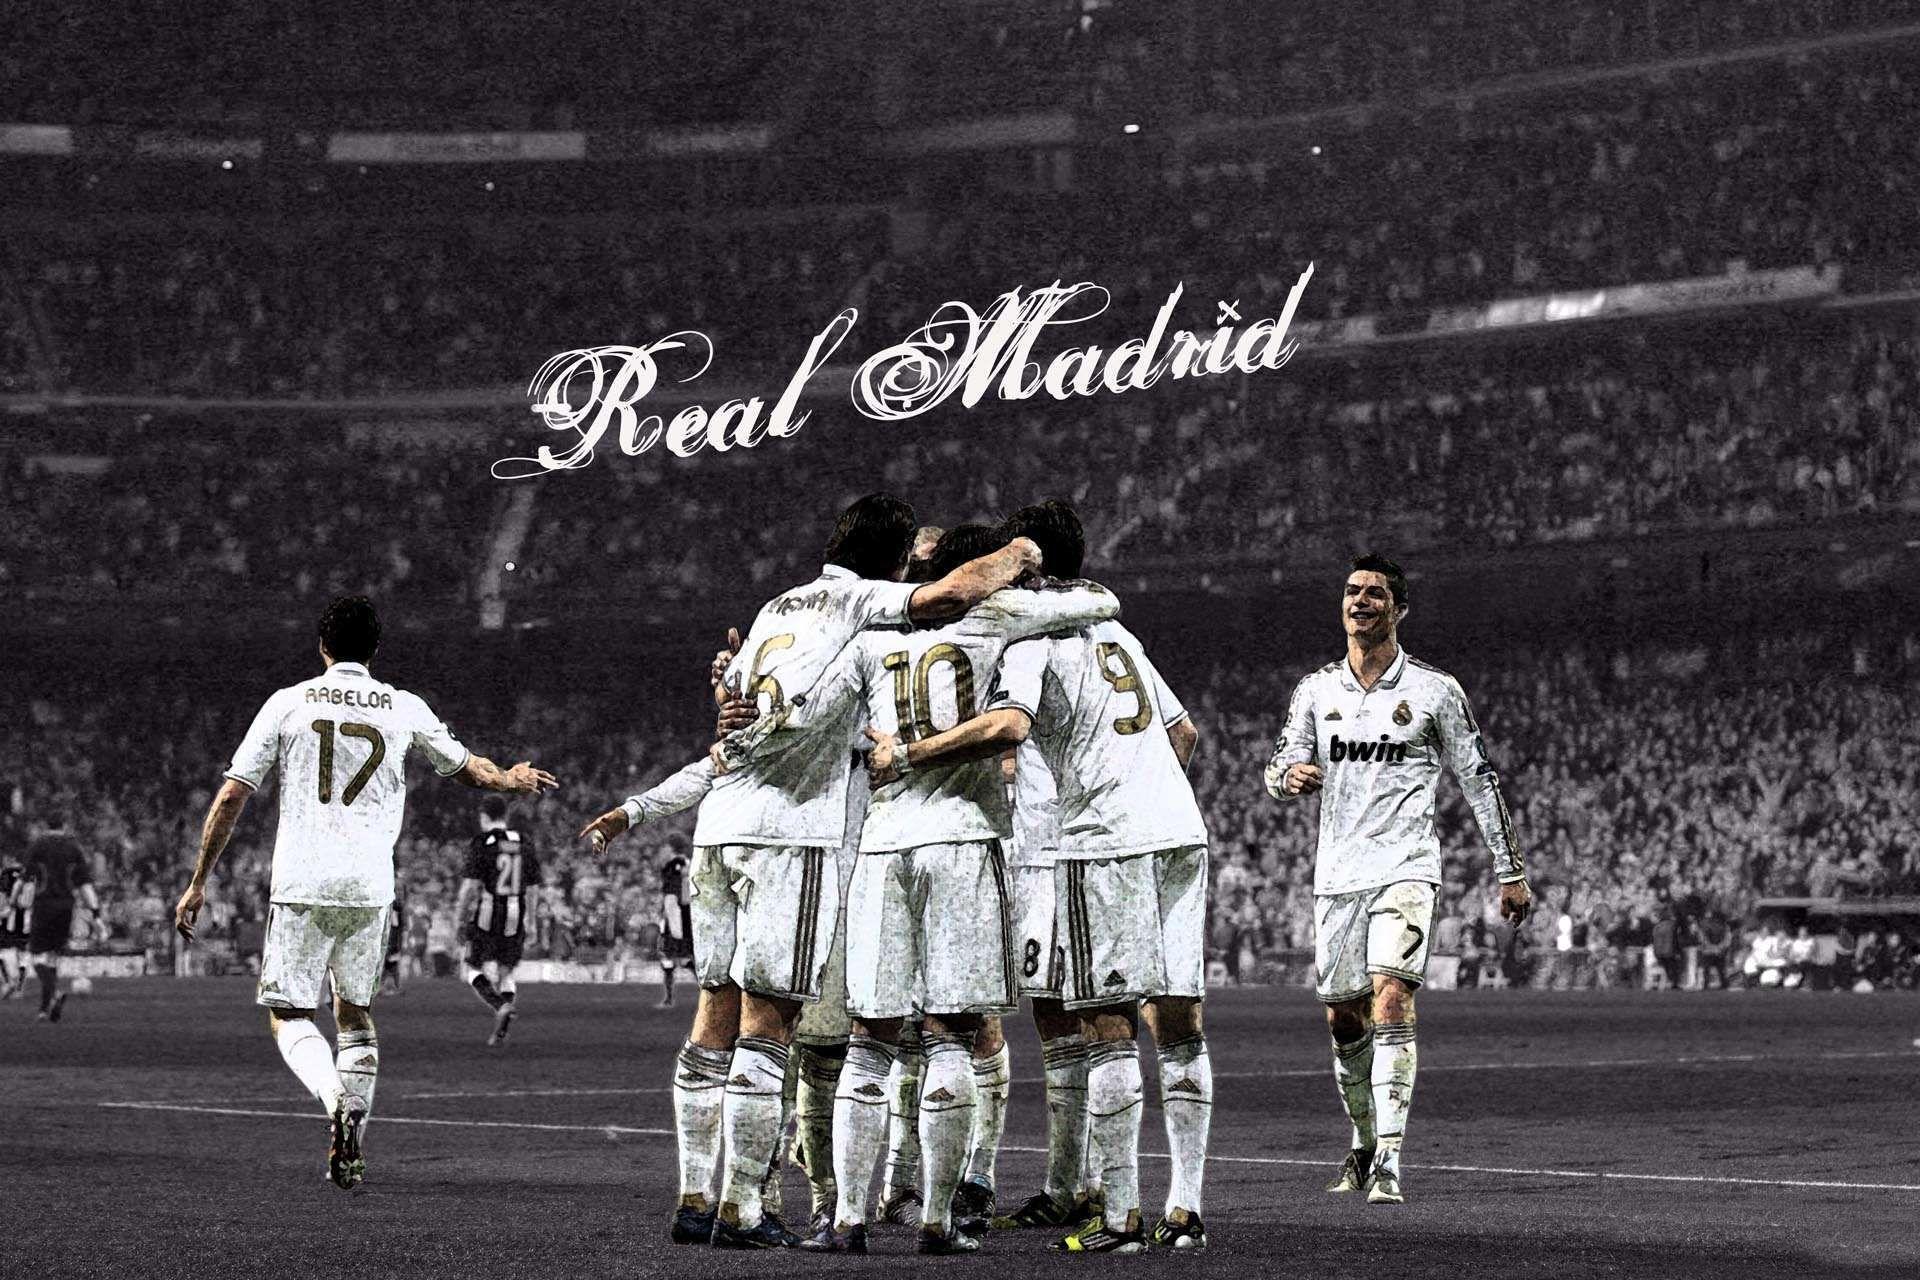 Real Madrid 2016 Wallpaper 3D